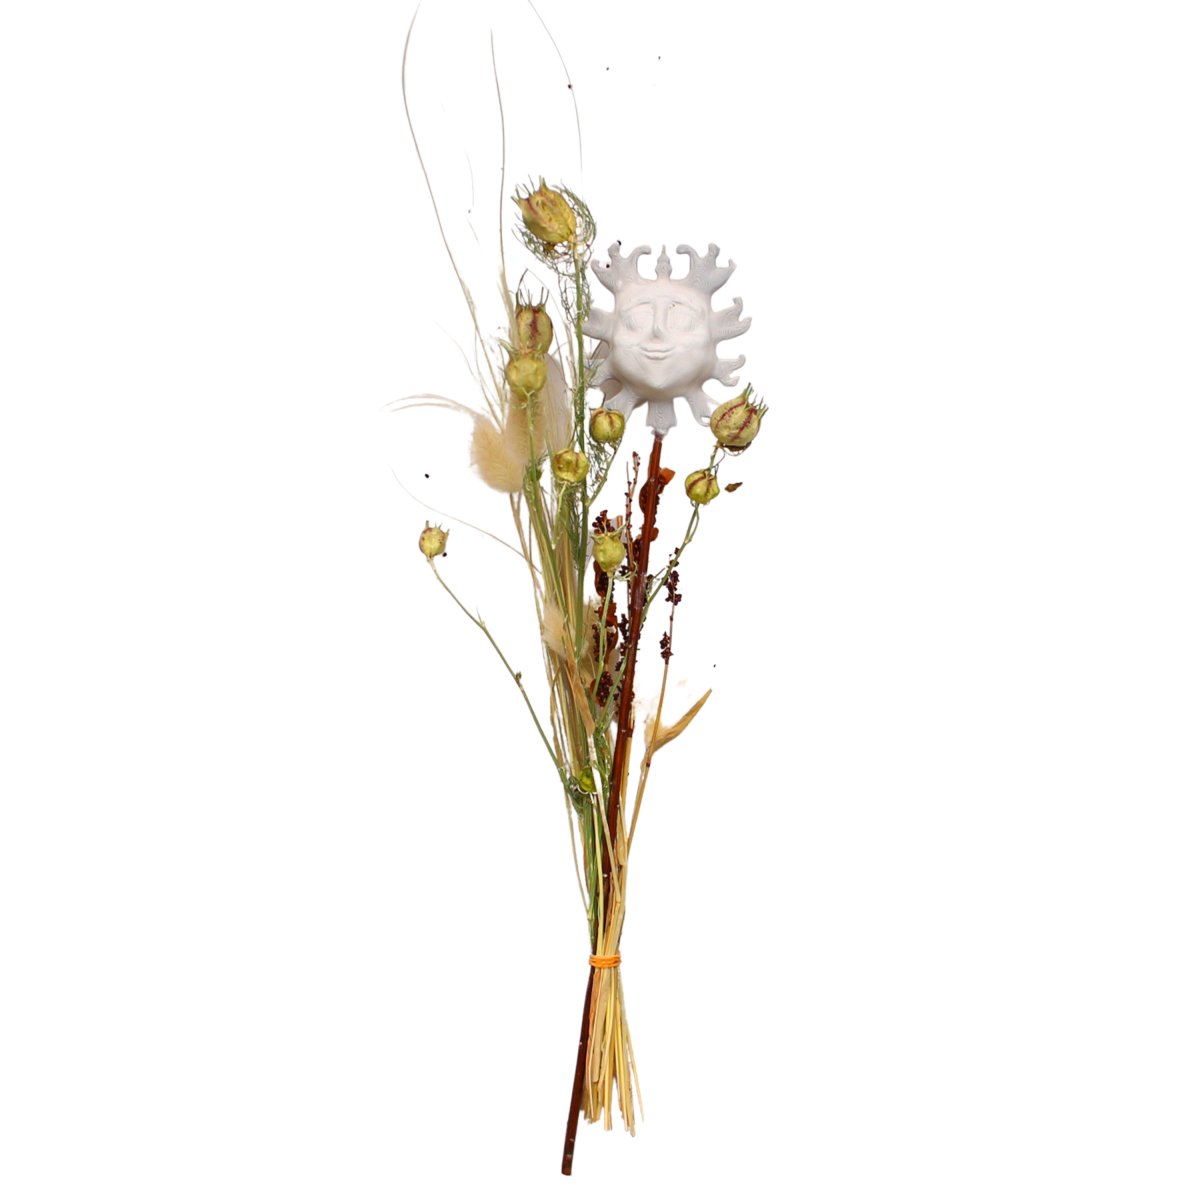 3D print flower head【GREY/WHITE】